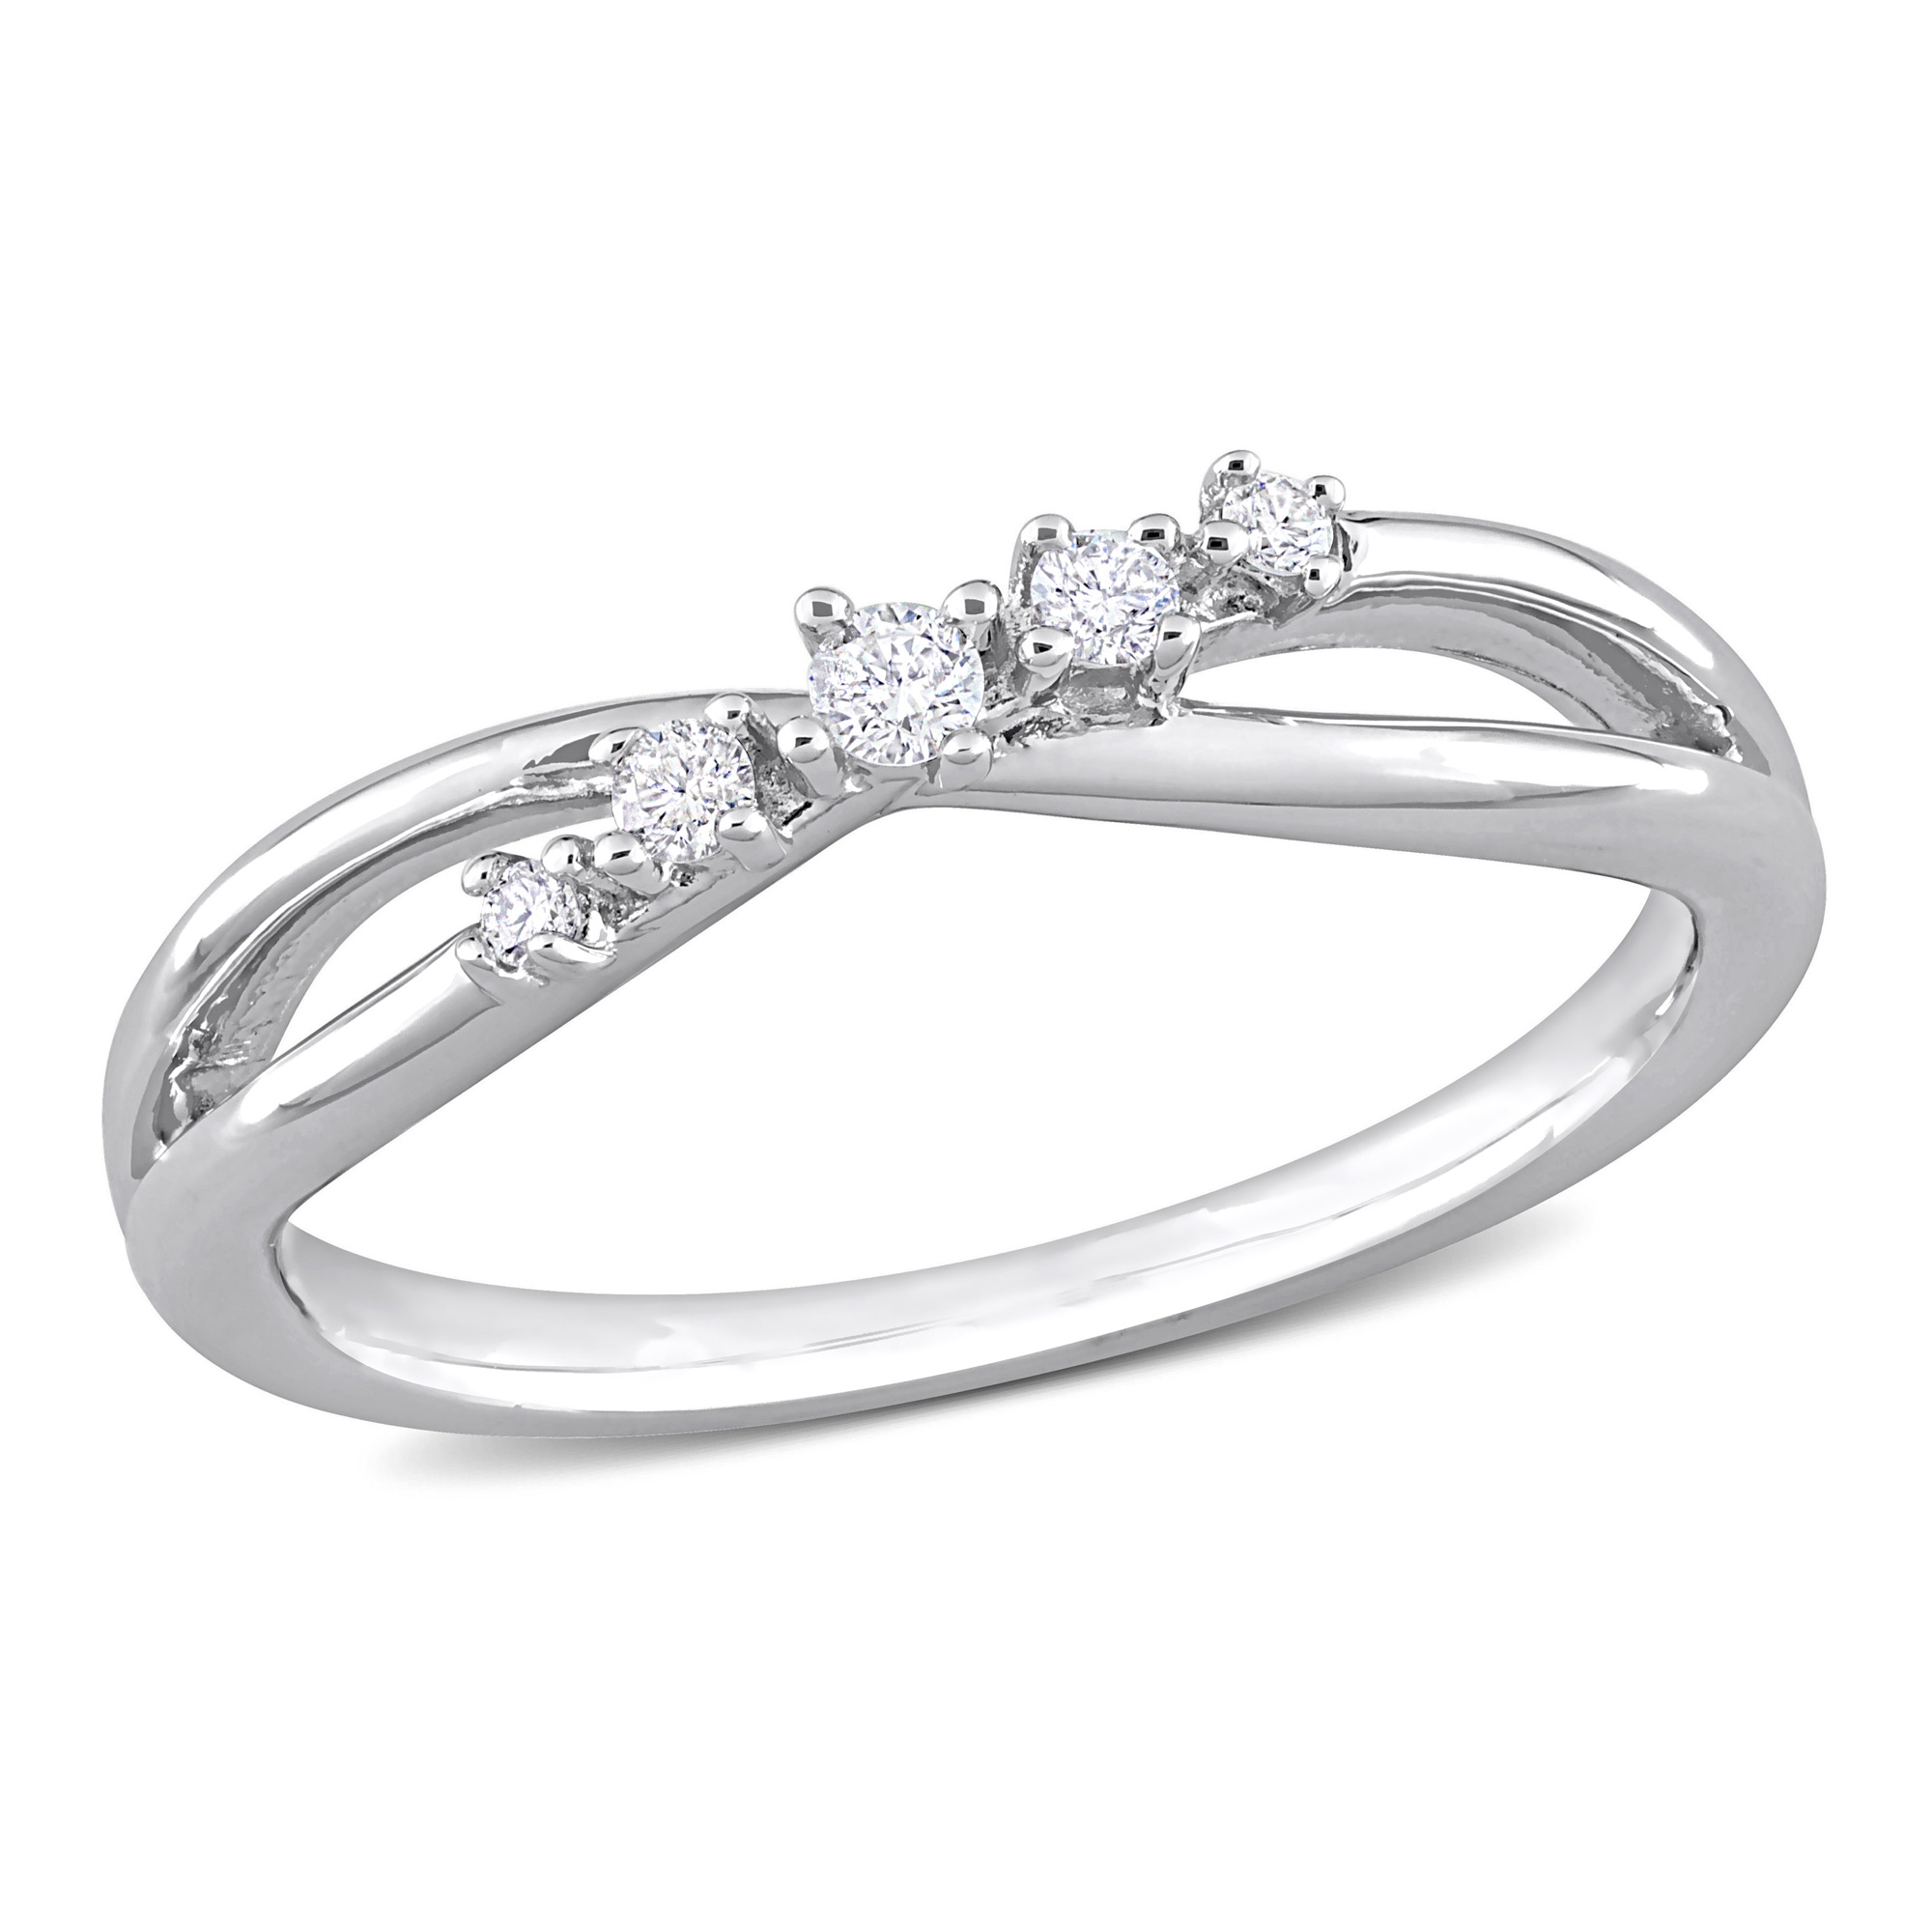 1/10ctw Diamond Diagonal Row Sterling Silver Fashion Ring - Size 8.5 -  REEDS, RDJ004636-0850